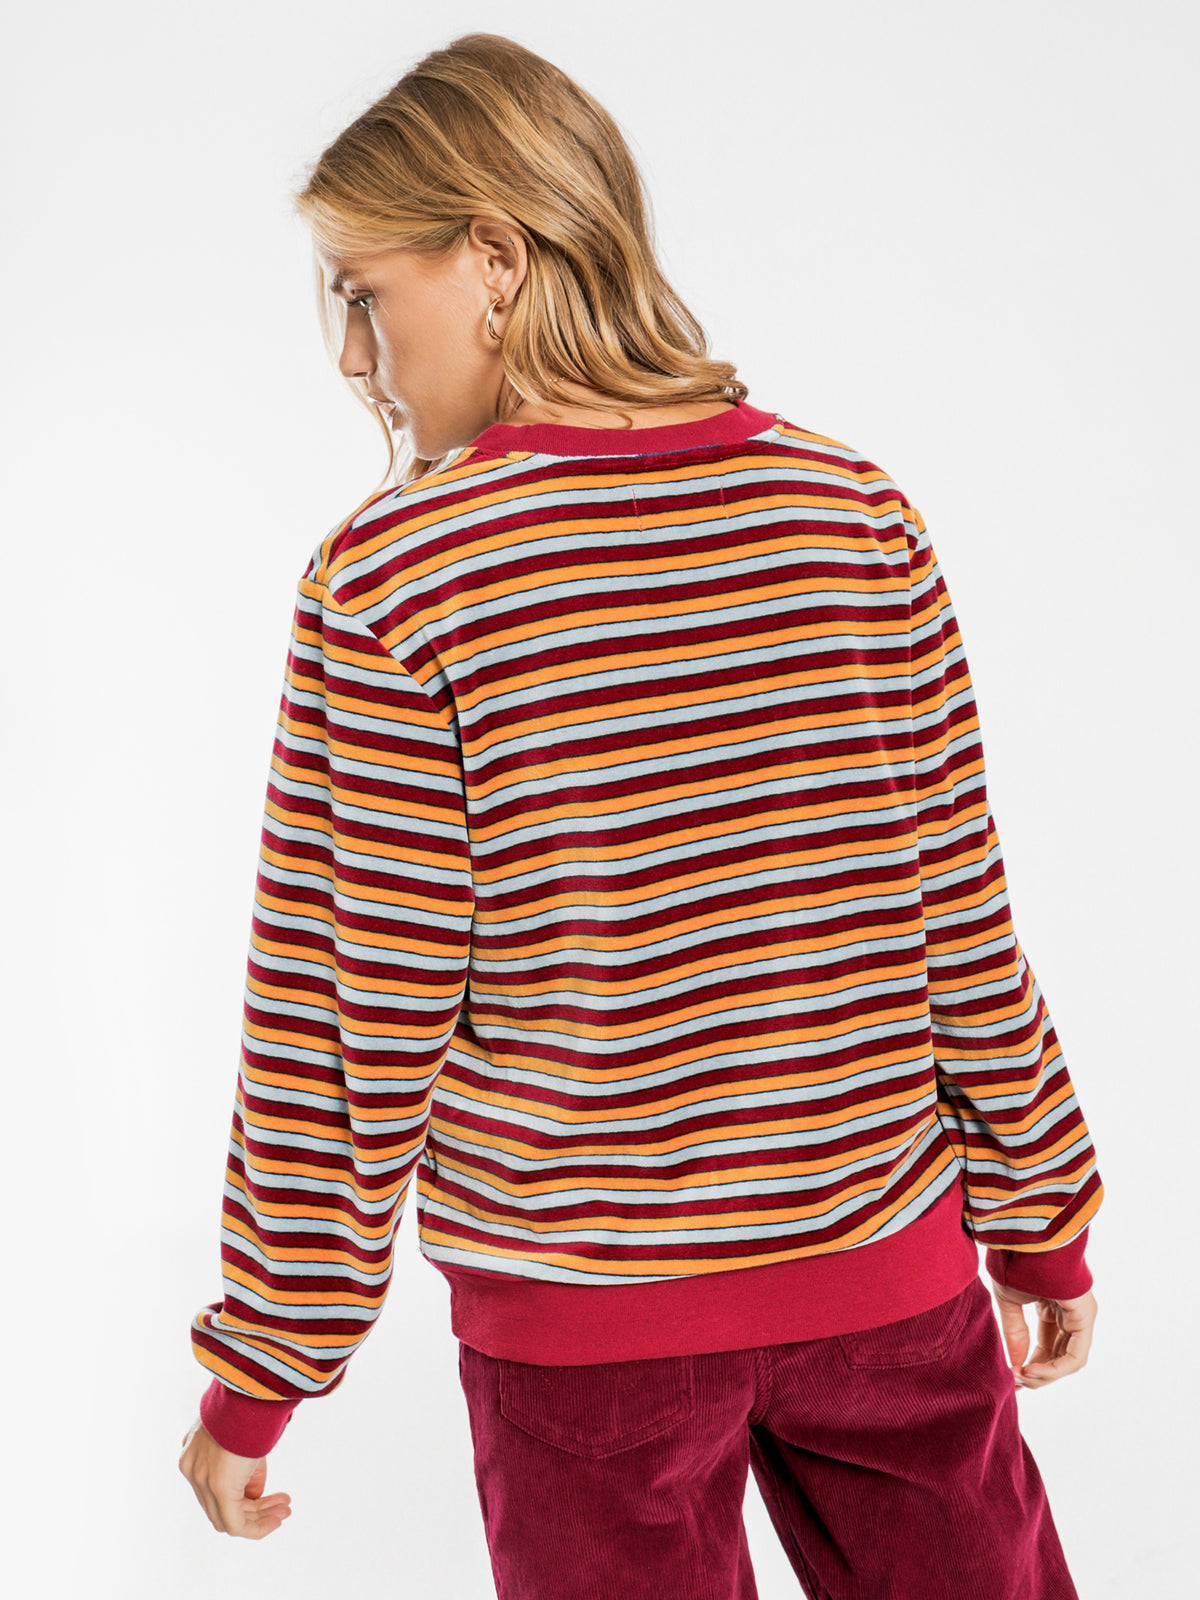 Simple Dreams Sweater in Plum Stripe